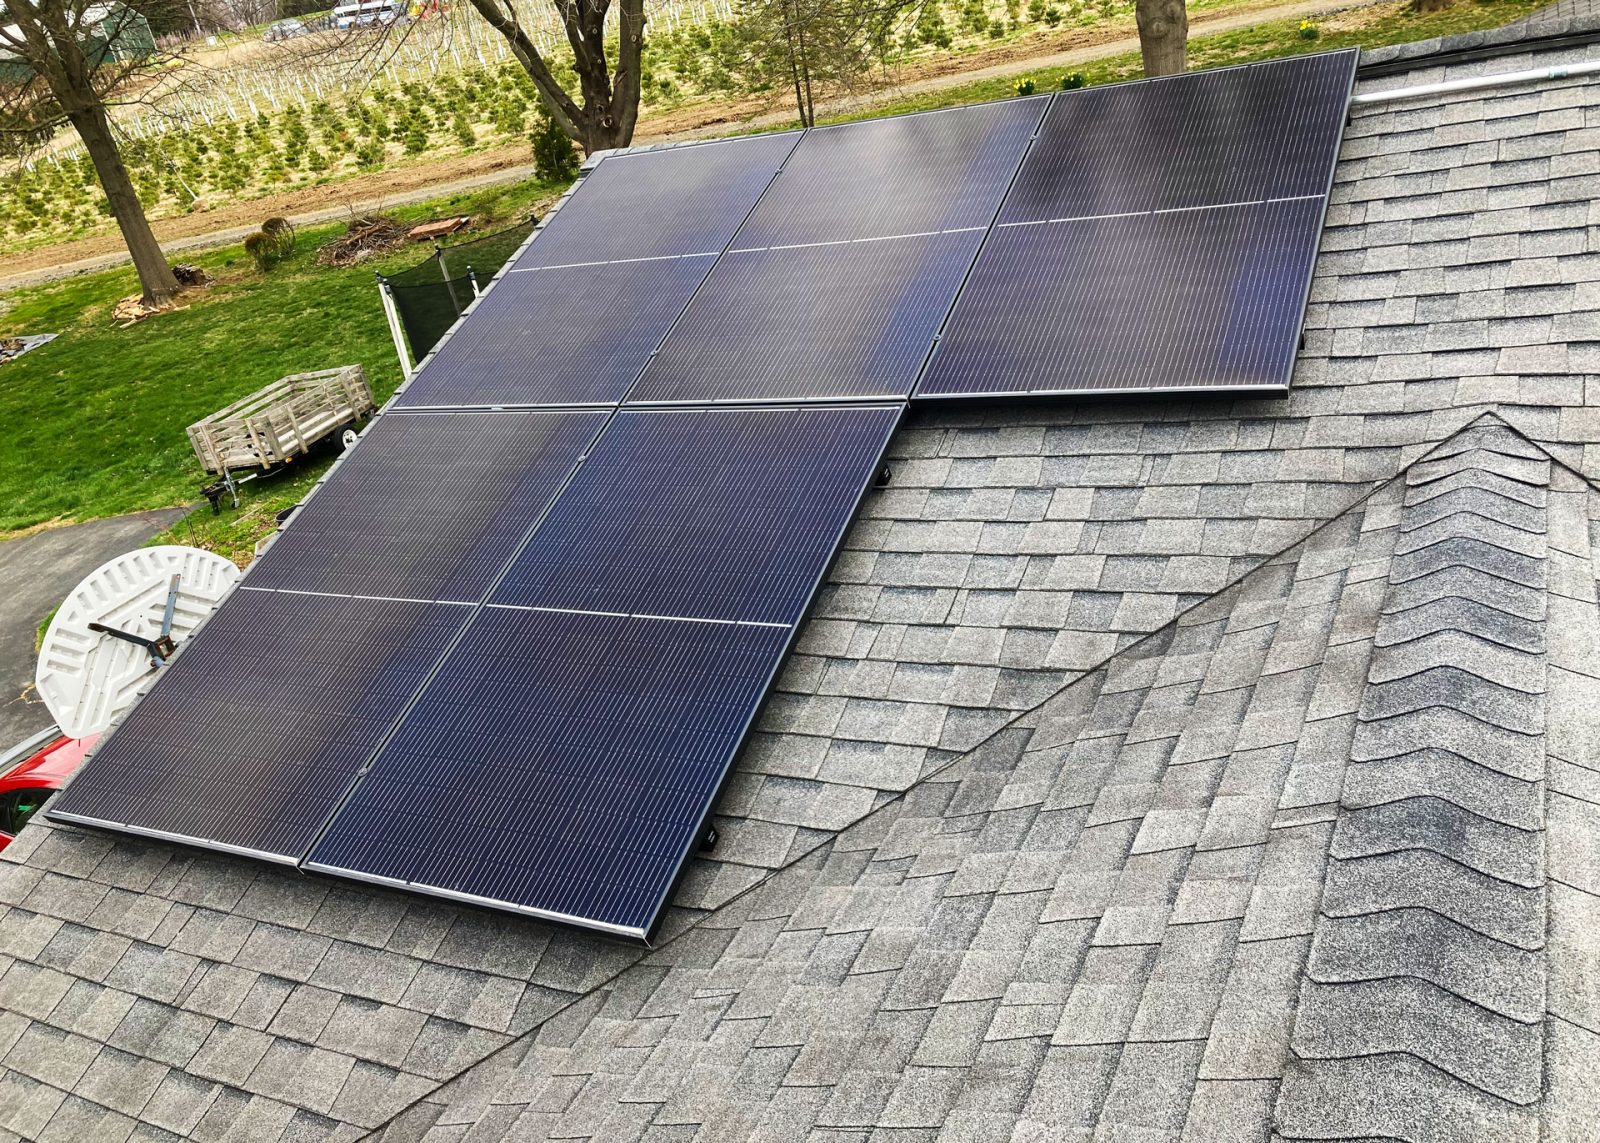 lincoln university solar panel installation winaico solar panels on roof